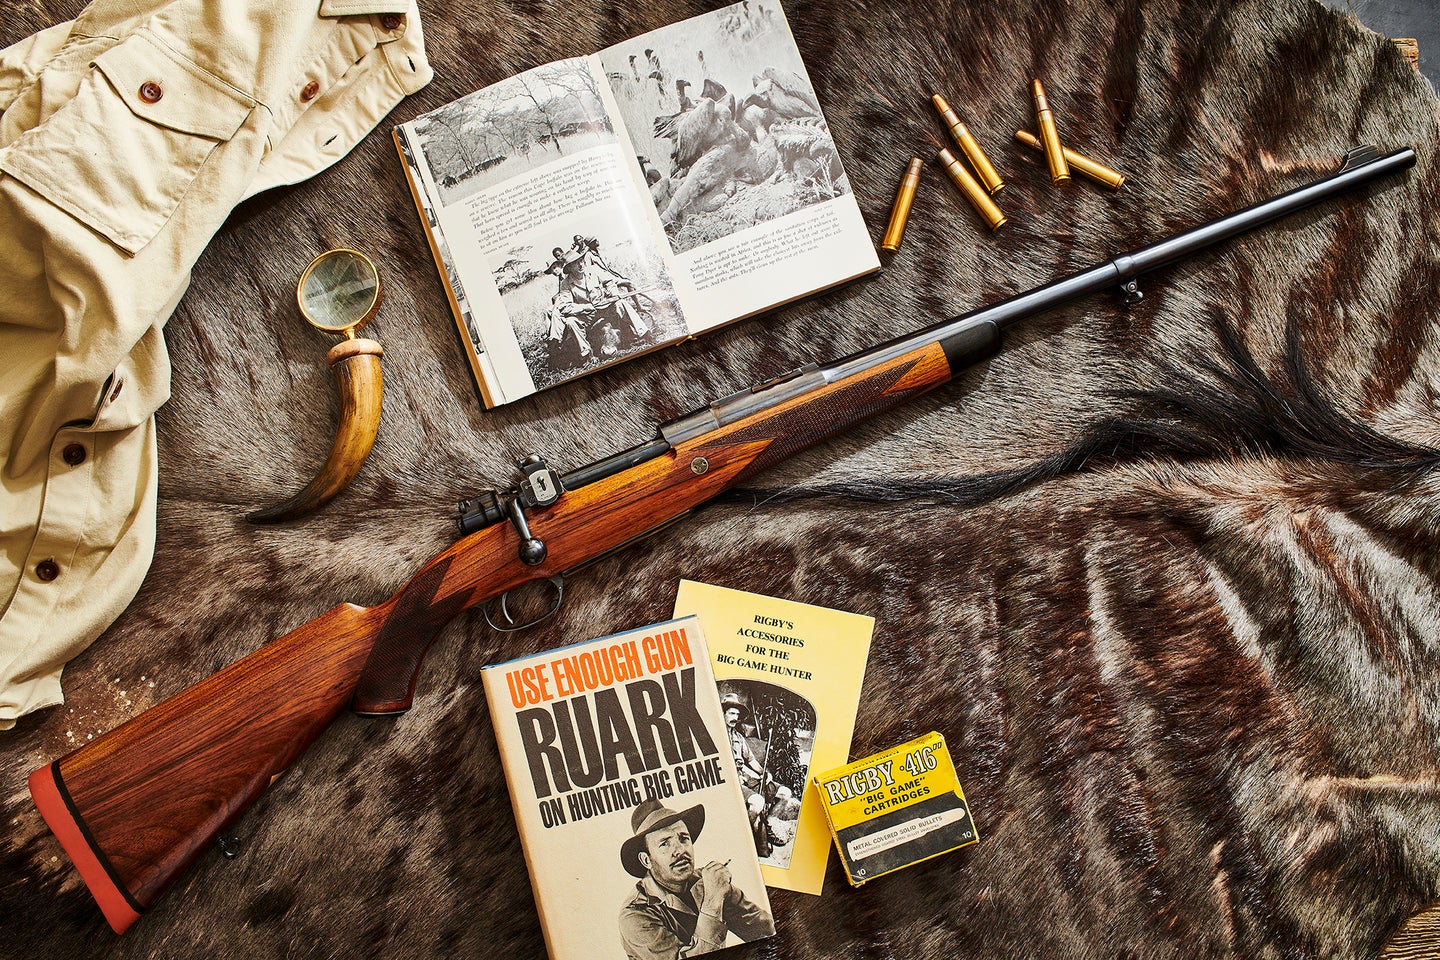 Rifle on fur with cartridges, Ruark book